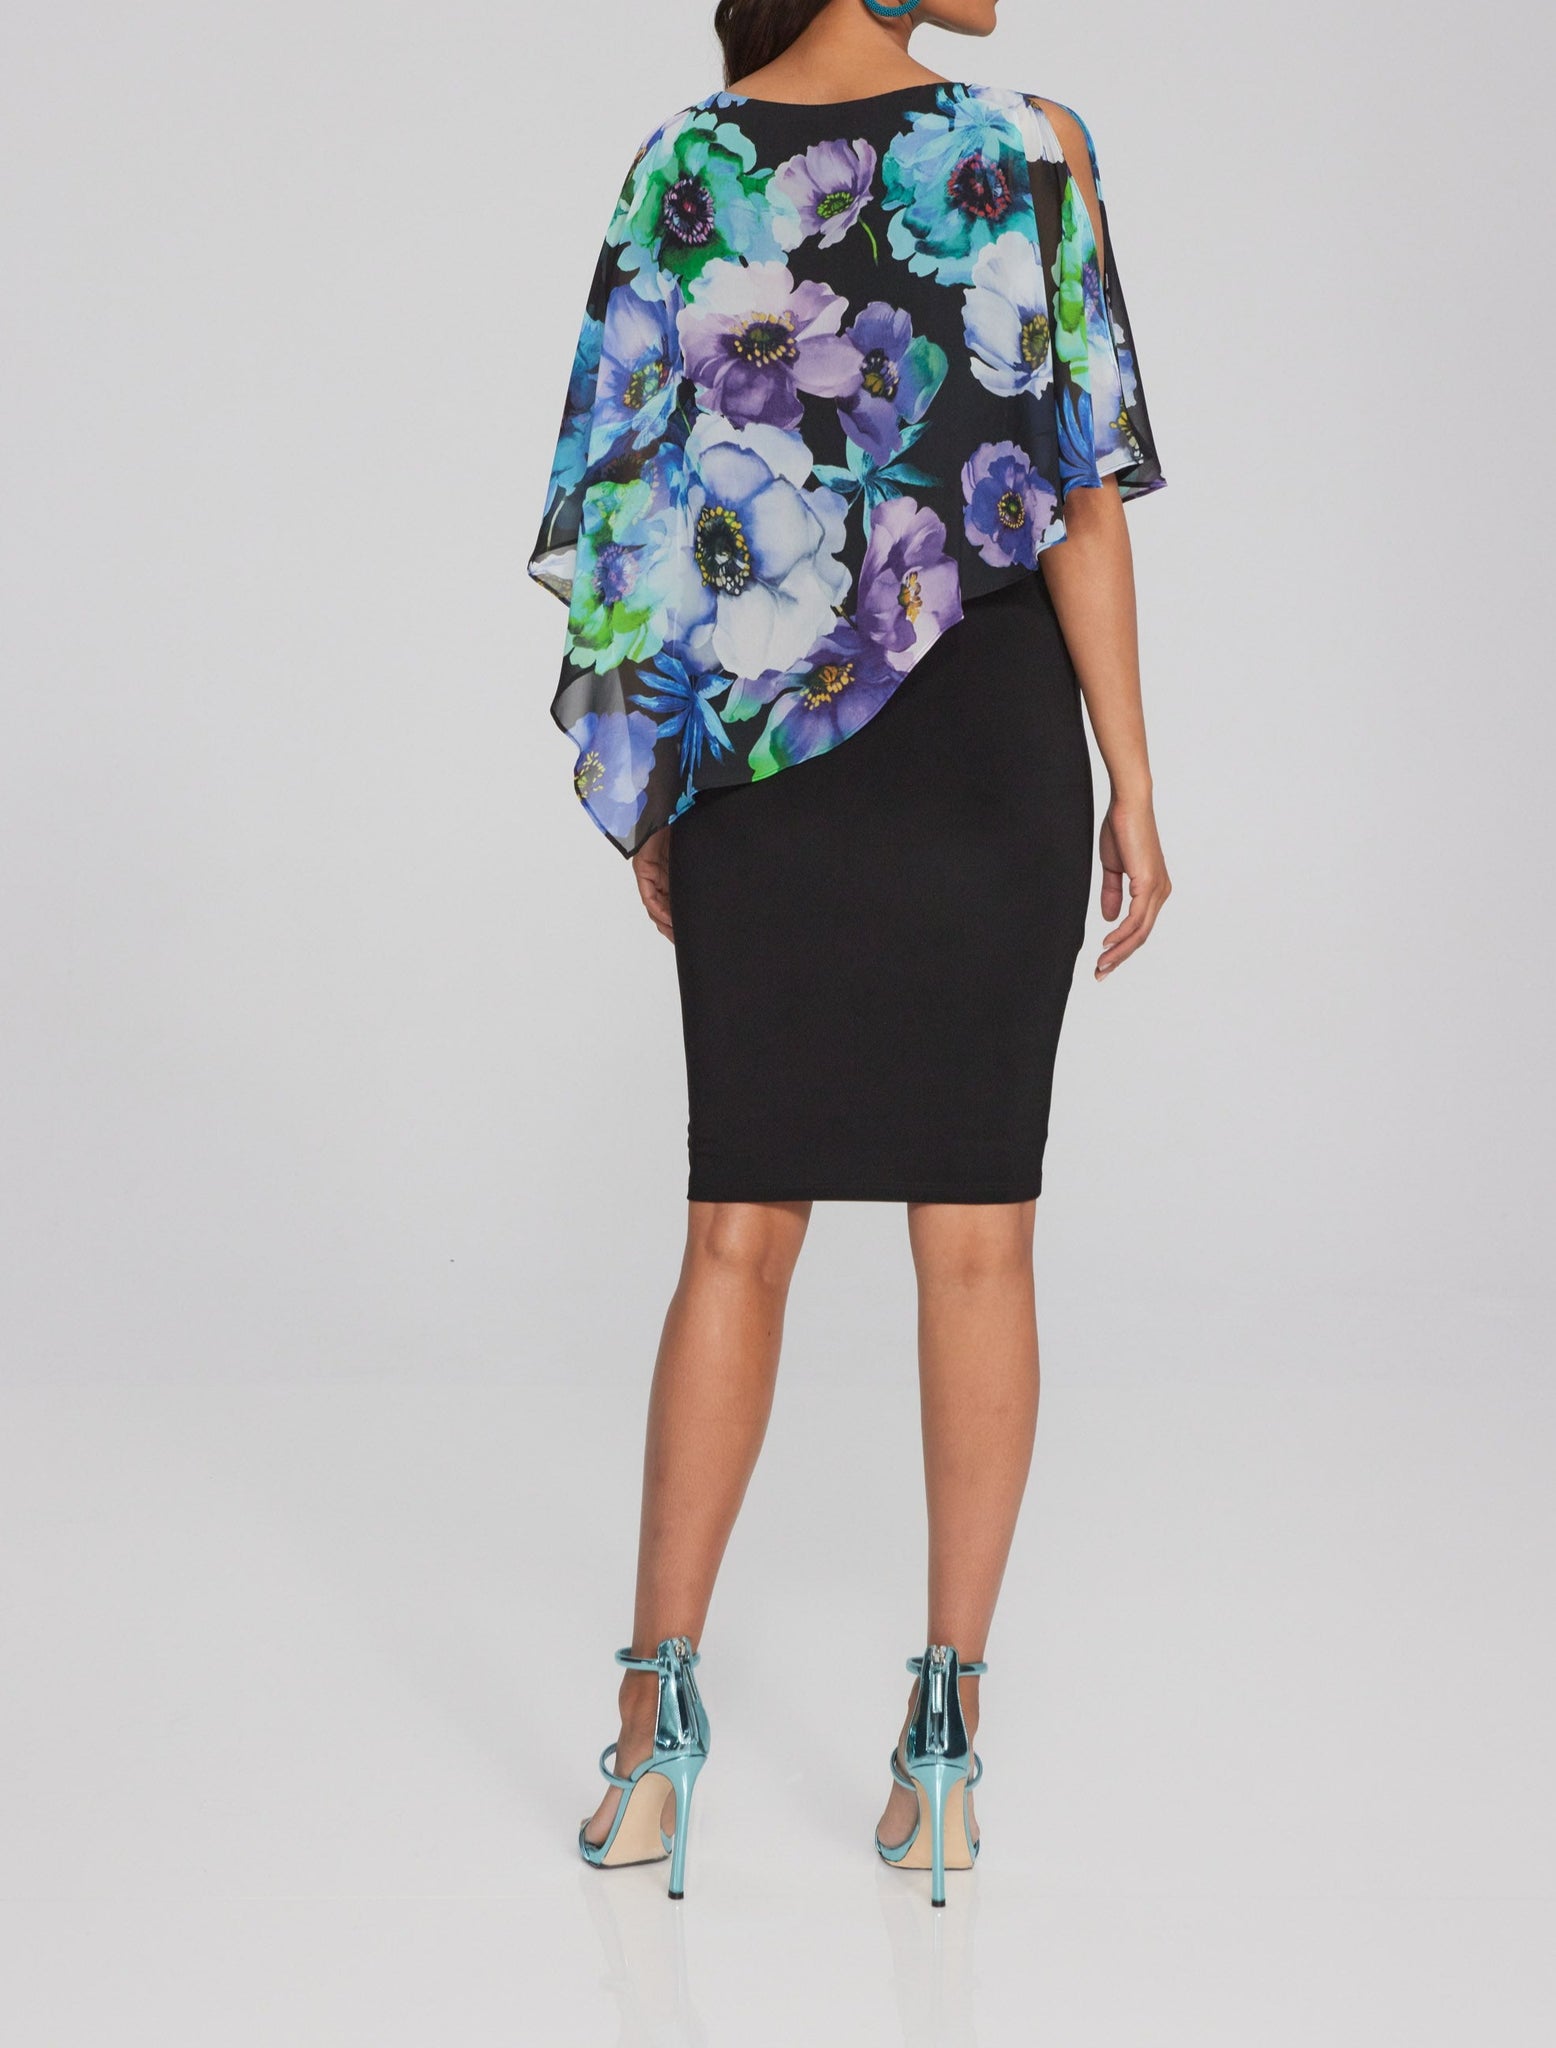 Floral Print Chiffon and Silky Knit Dress| Black Multi